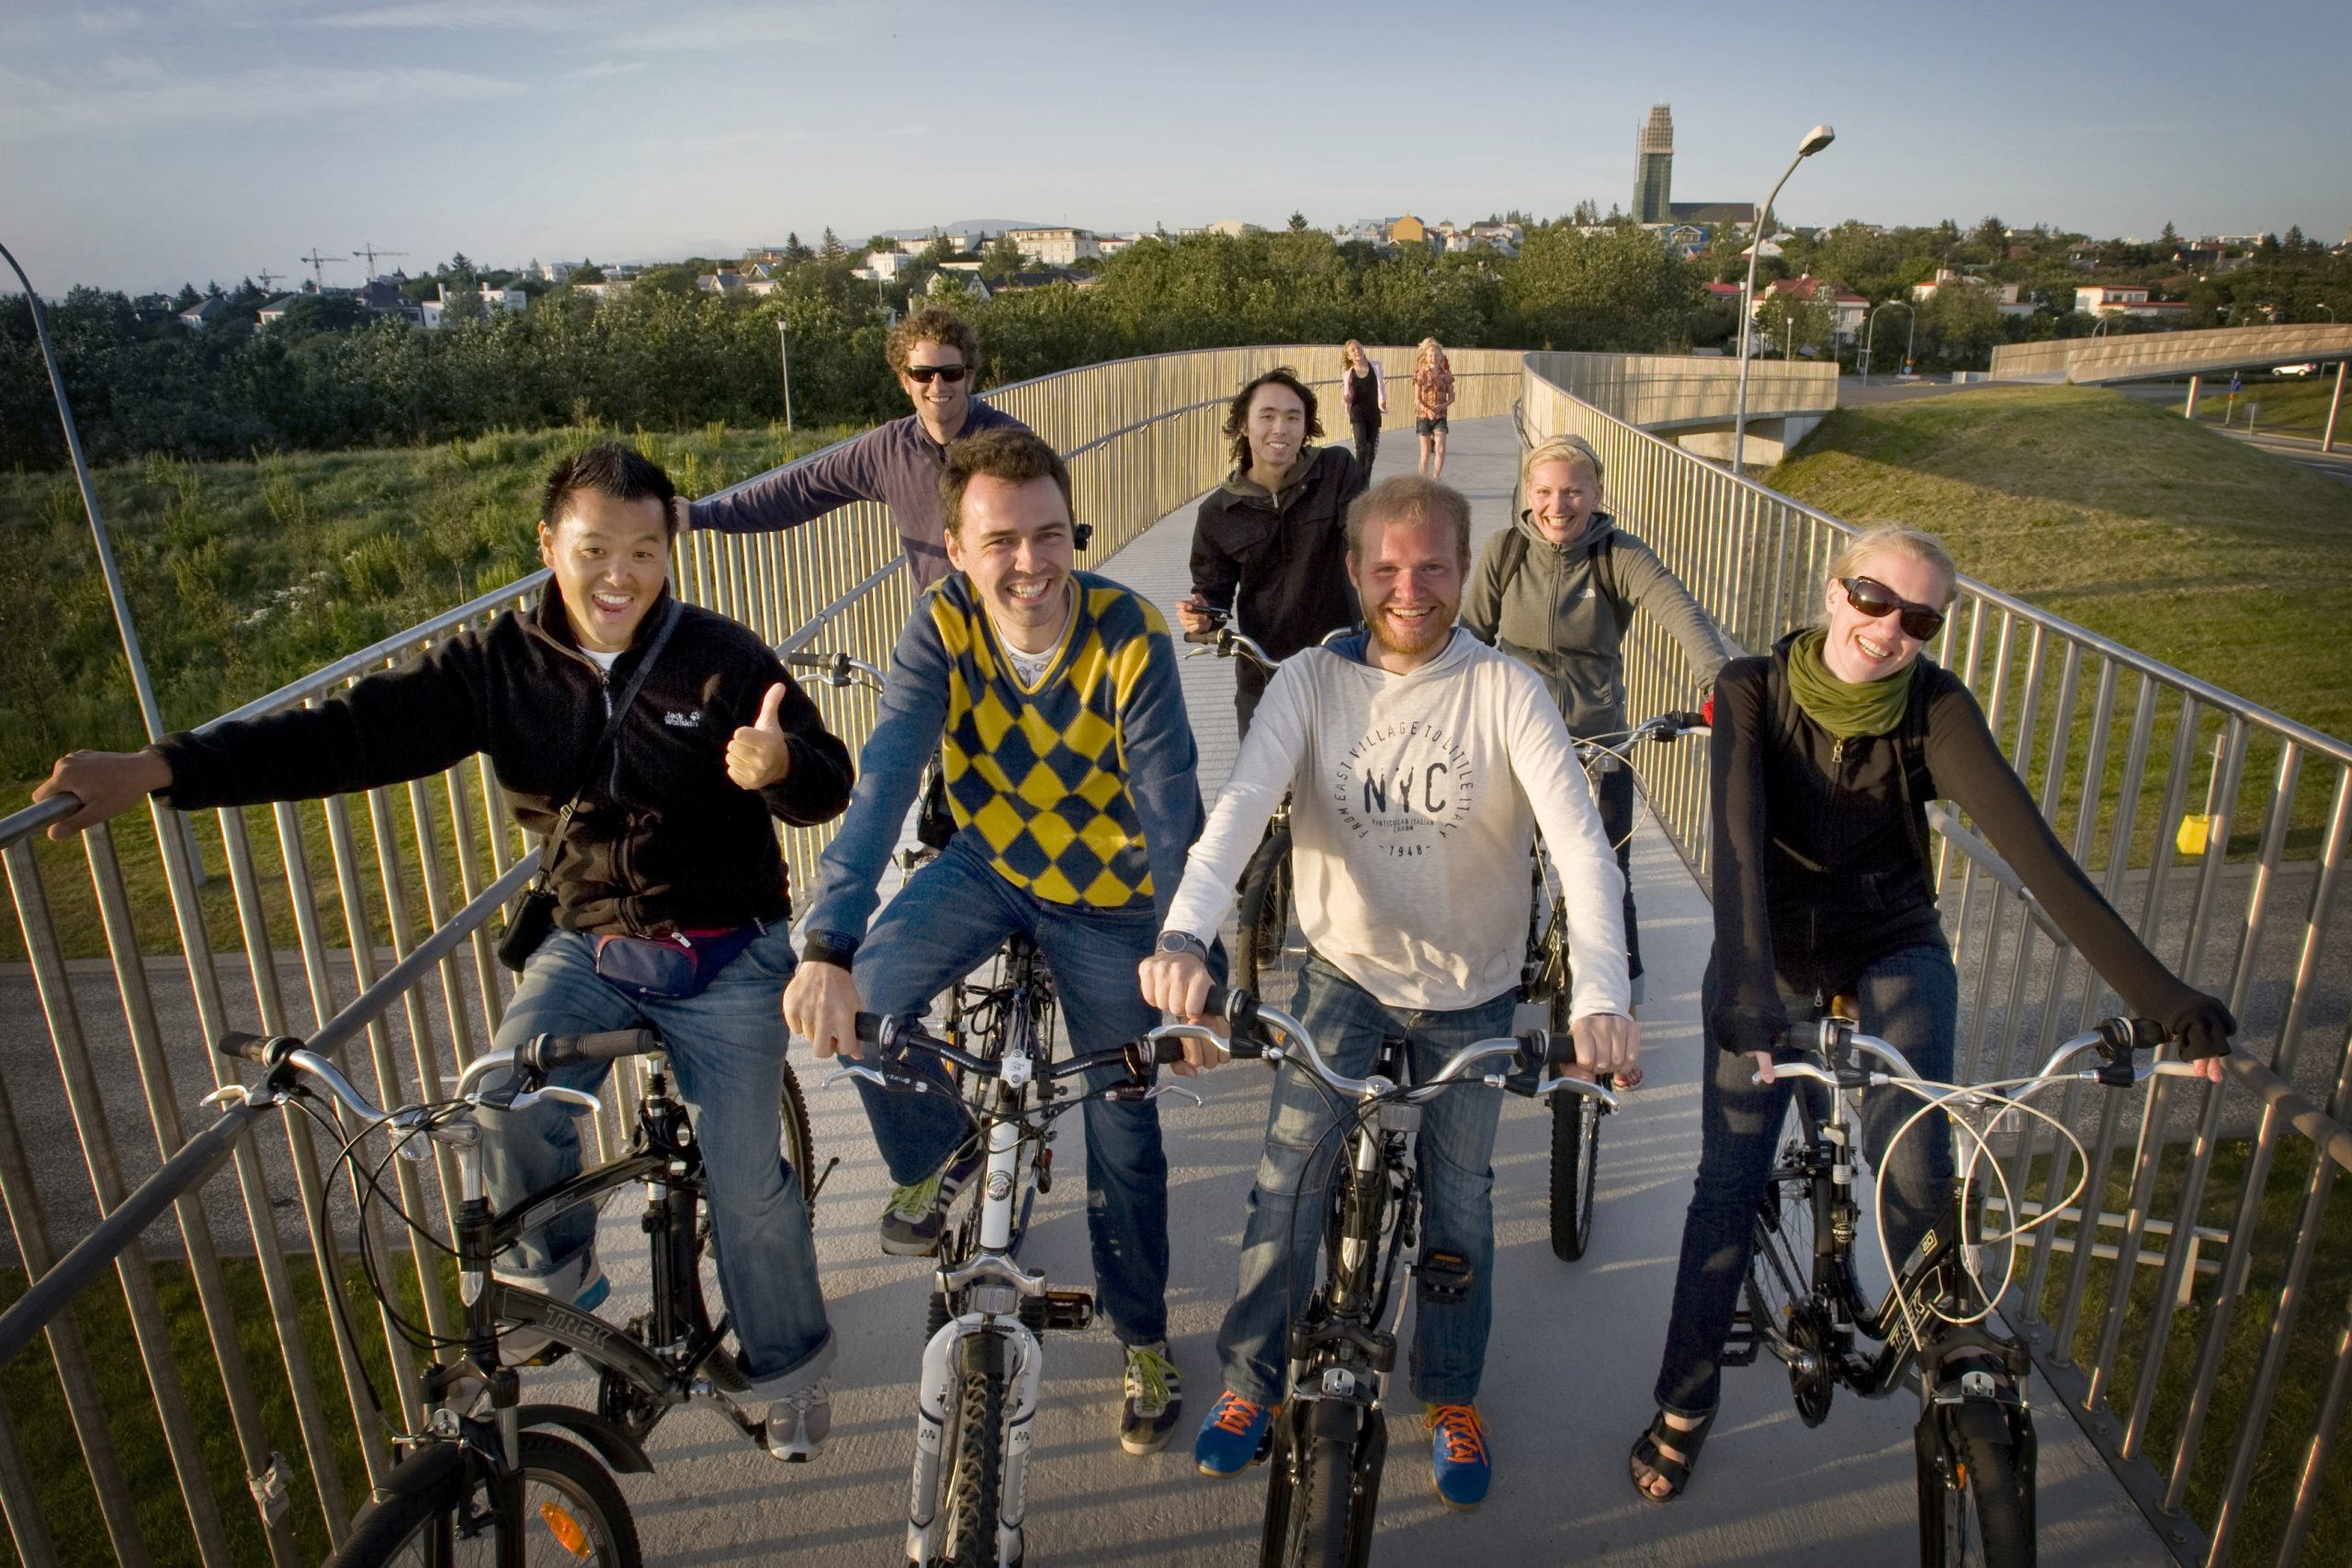 Classic Reykjavik Bike Tour - the best bike tour in Reykjavik - the best way to see Reykjavik